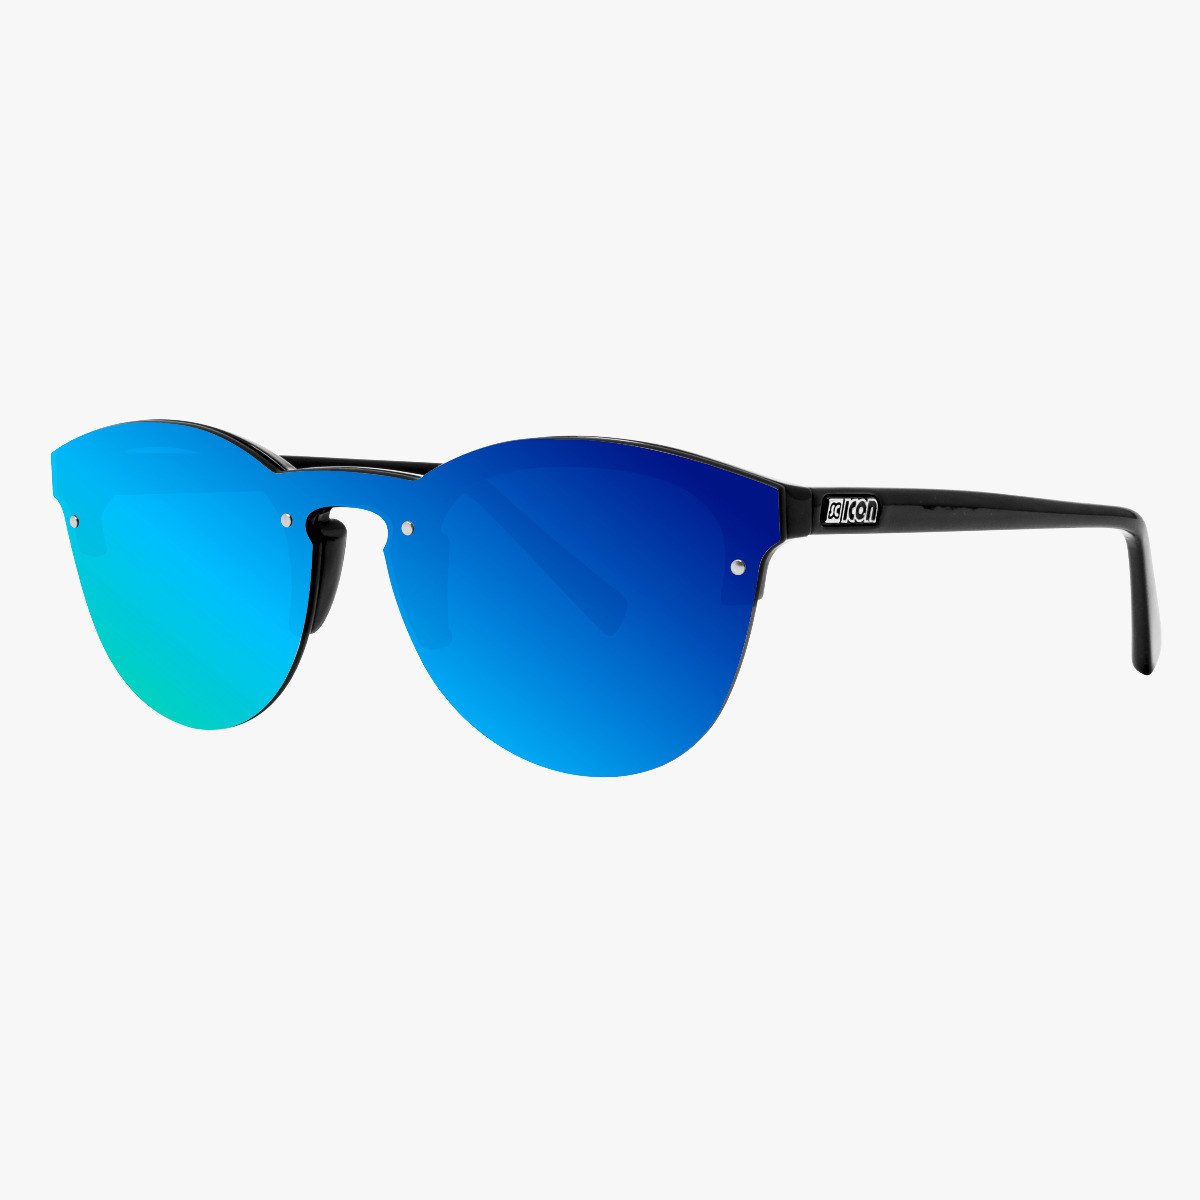 Scicon Sports | Protector Lifestyle Unisex Sunglasses - Black Frame, Blue Lens - EY170302